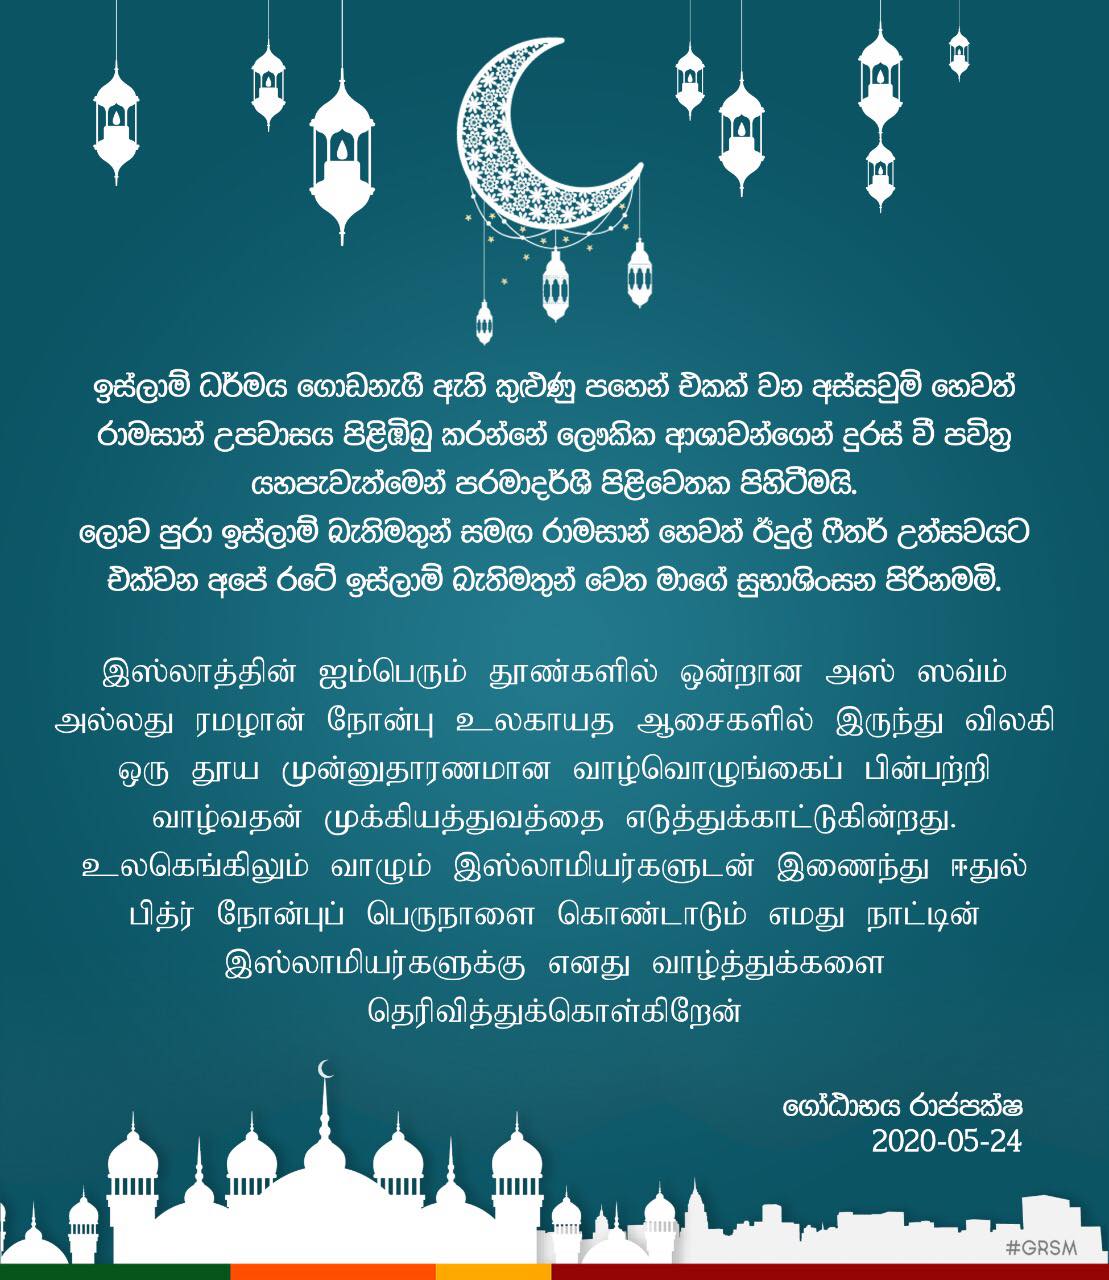 My heartiest greetings to all Muslims in Sri Lanka